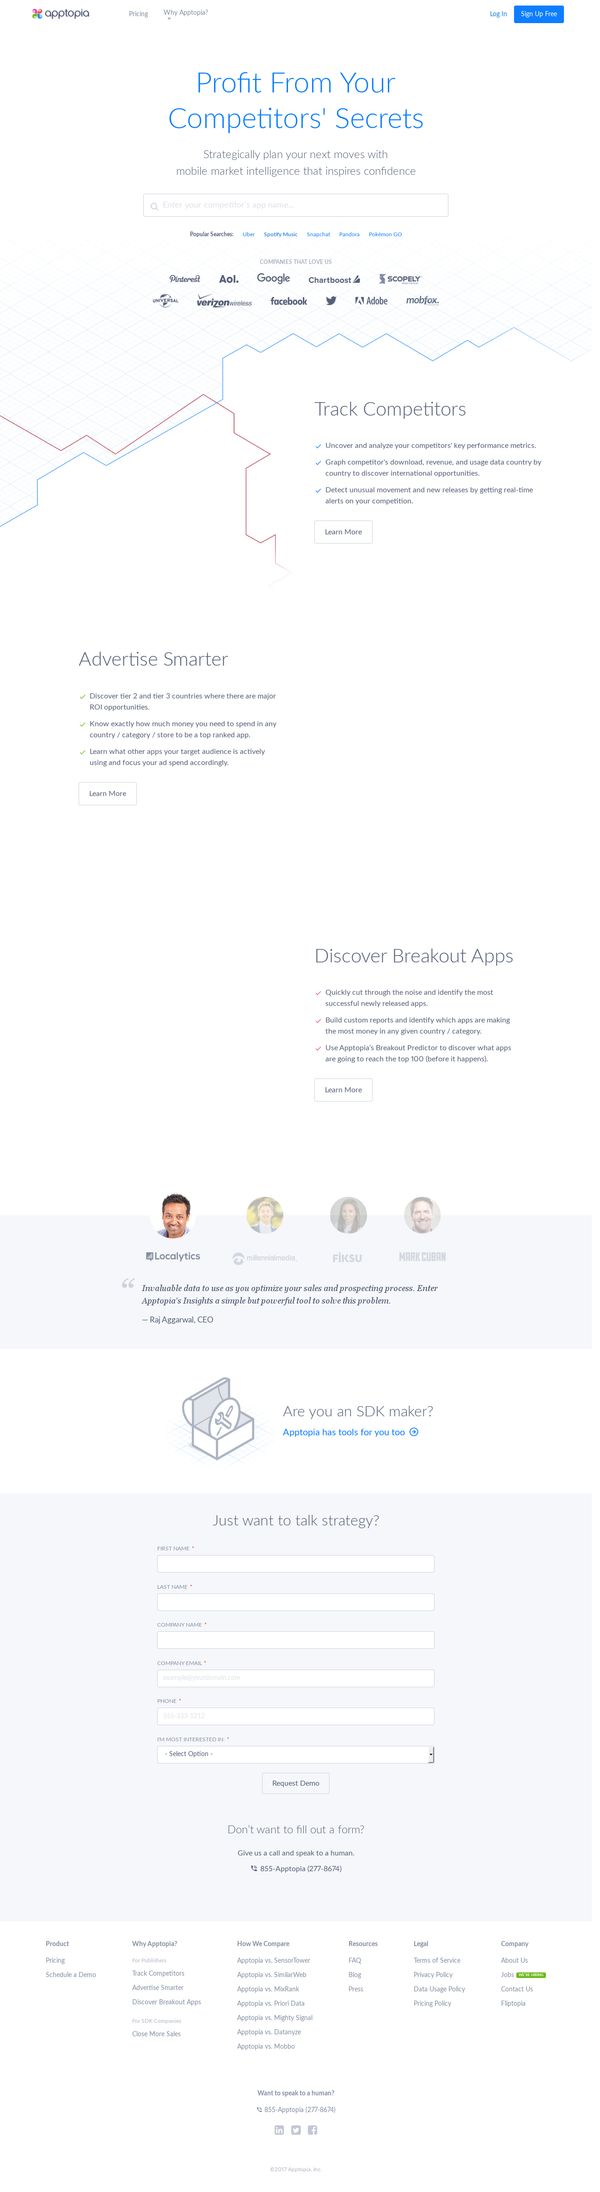 Mobile App Downloads, SDK, Revenue & Usage Data | Apptopia